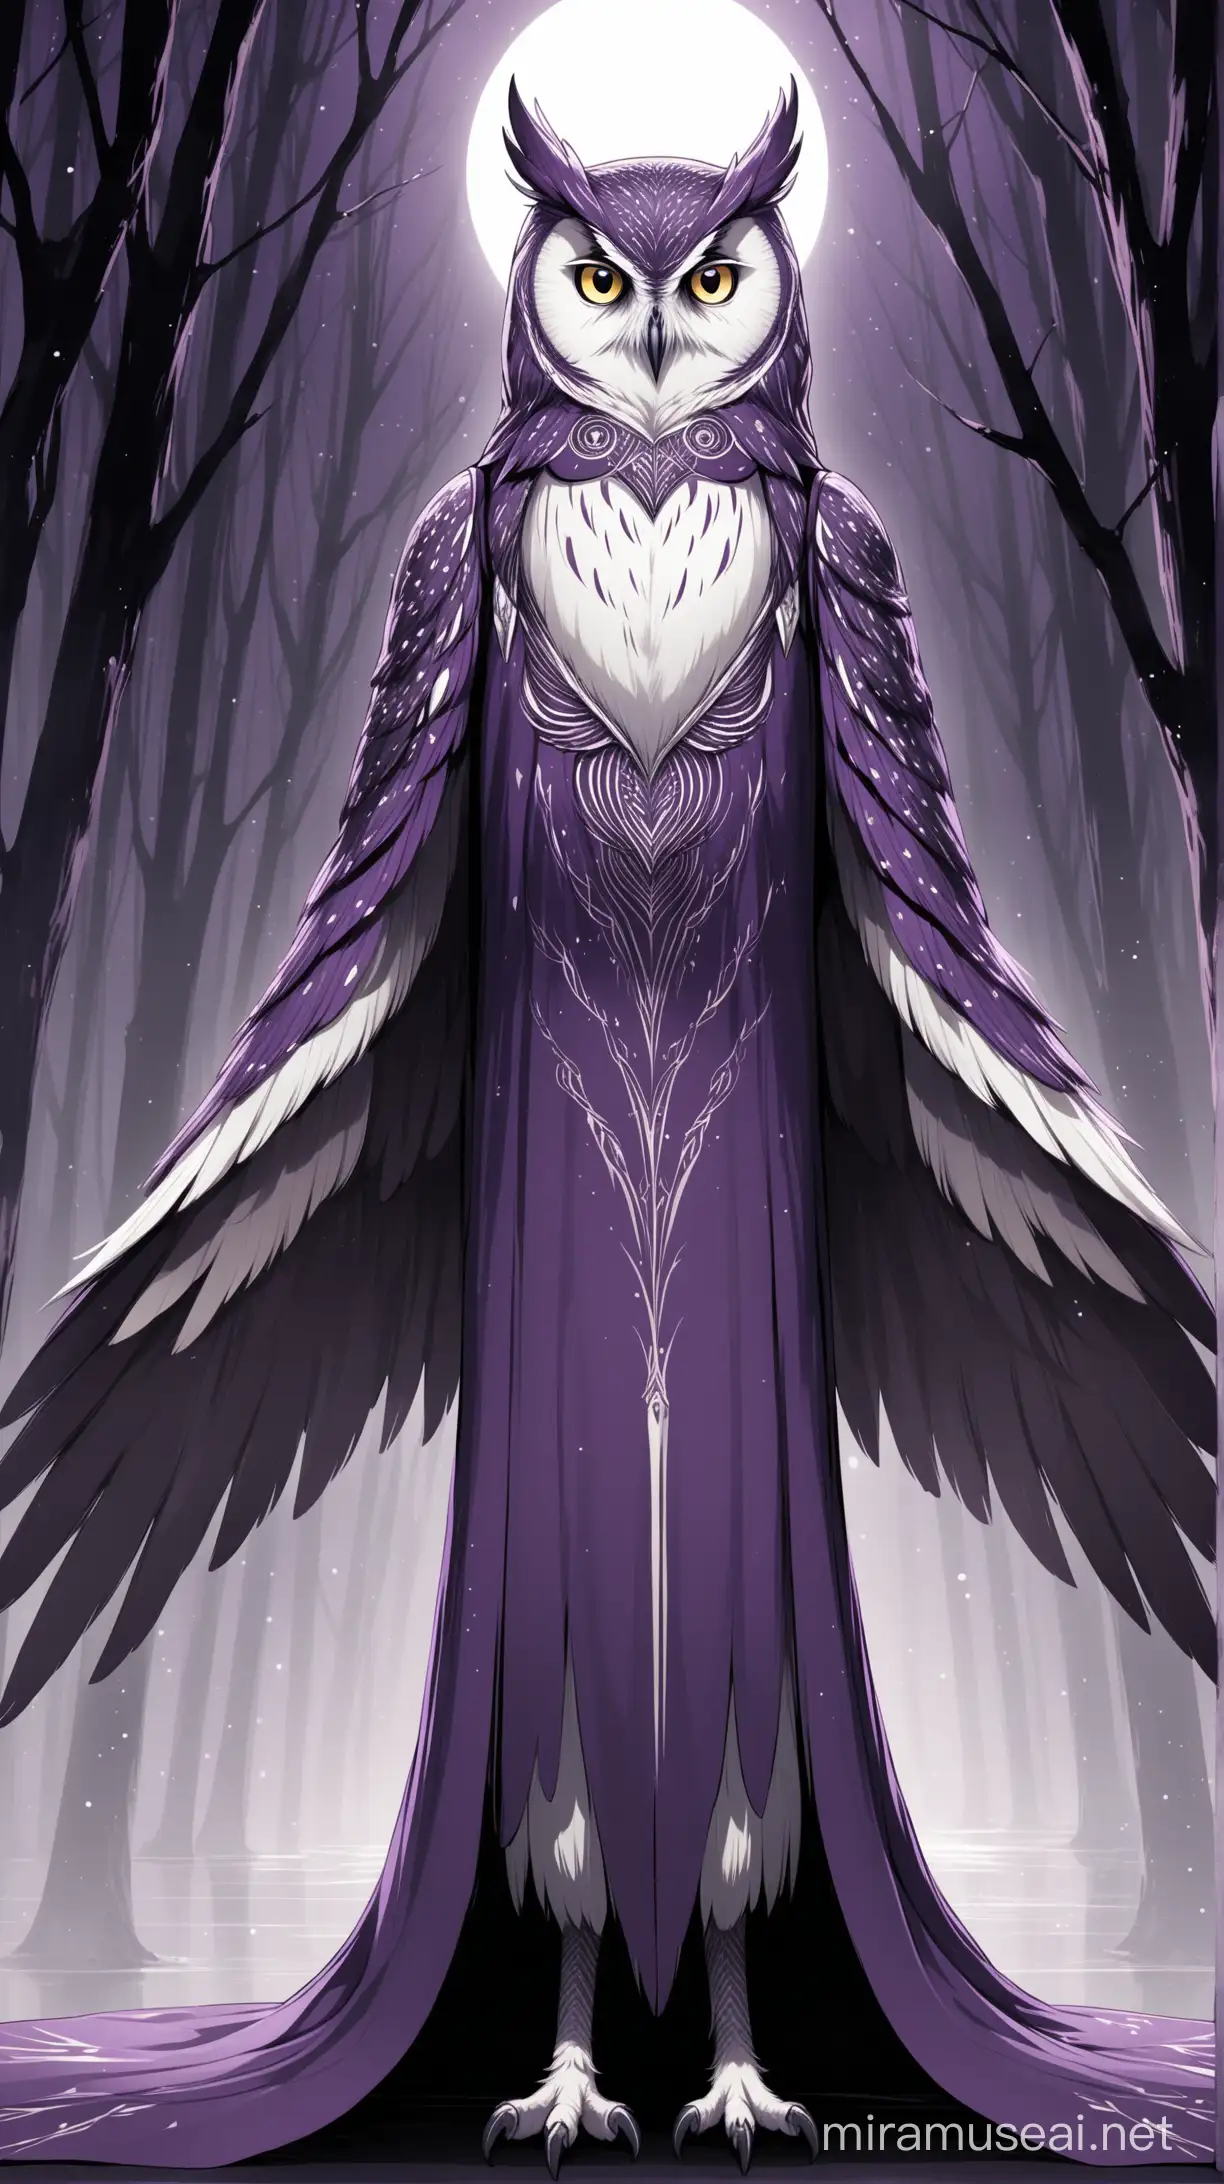 Elegant Owl in Lavish Purple and Grey Robes